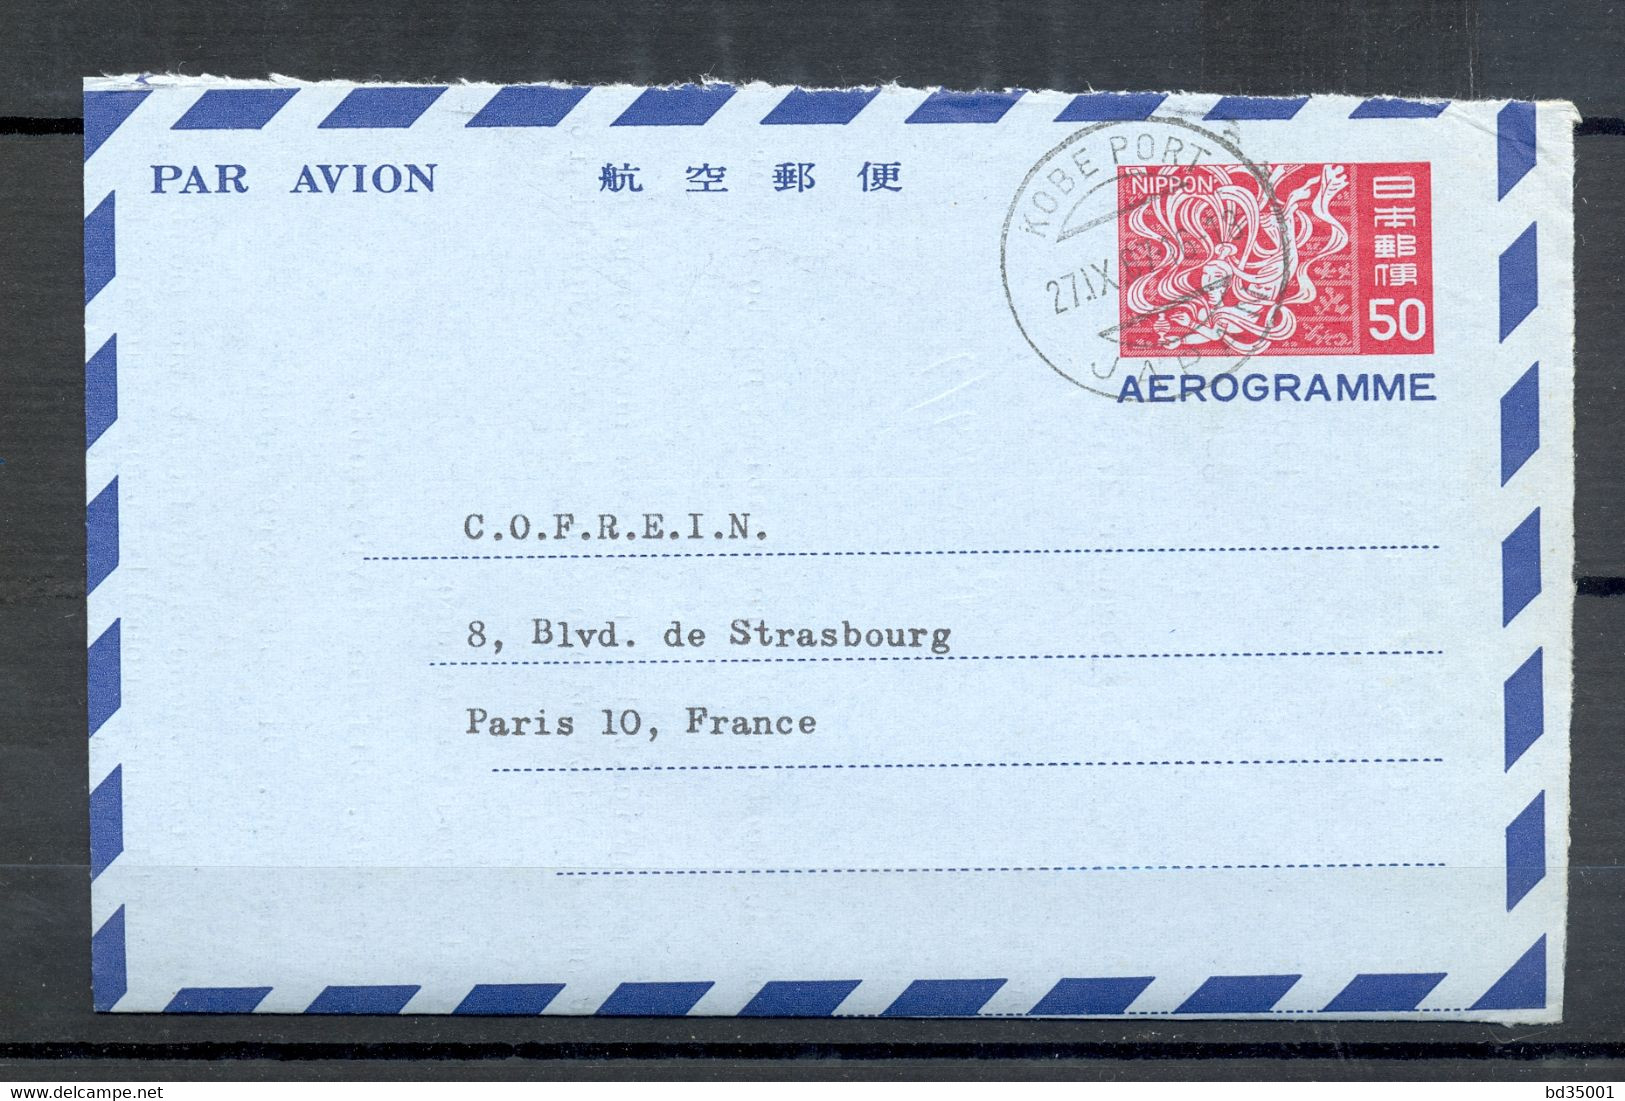 AEROGRAMME - AIR LETTER - JAPON - JAPON - 1967 - KOBE PORT VERS PARIS - (6) - Aerograms